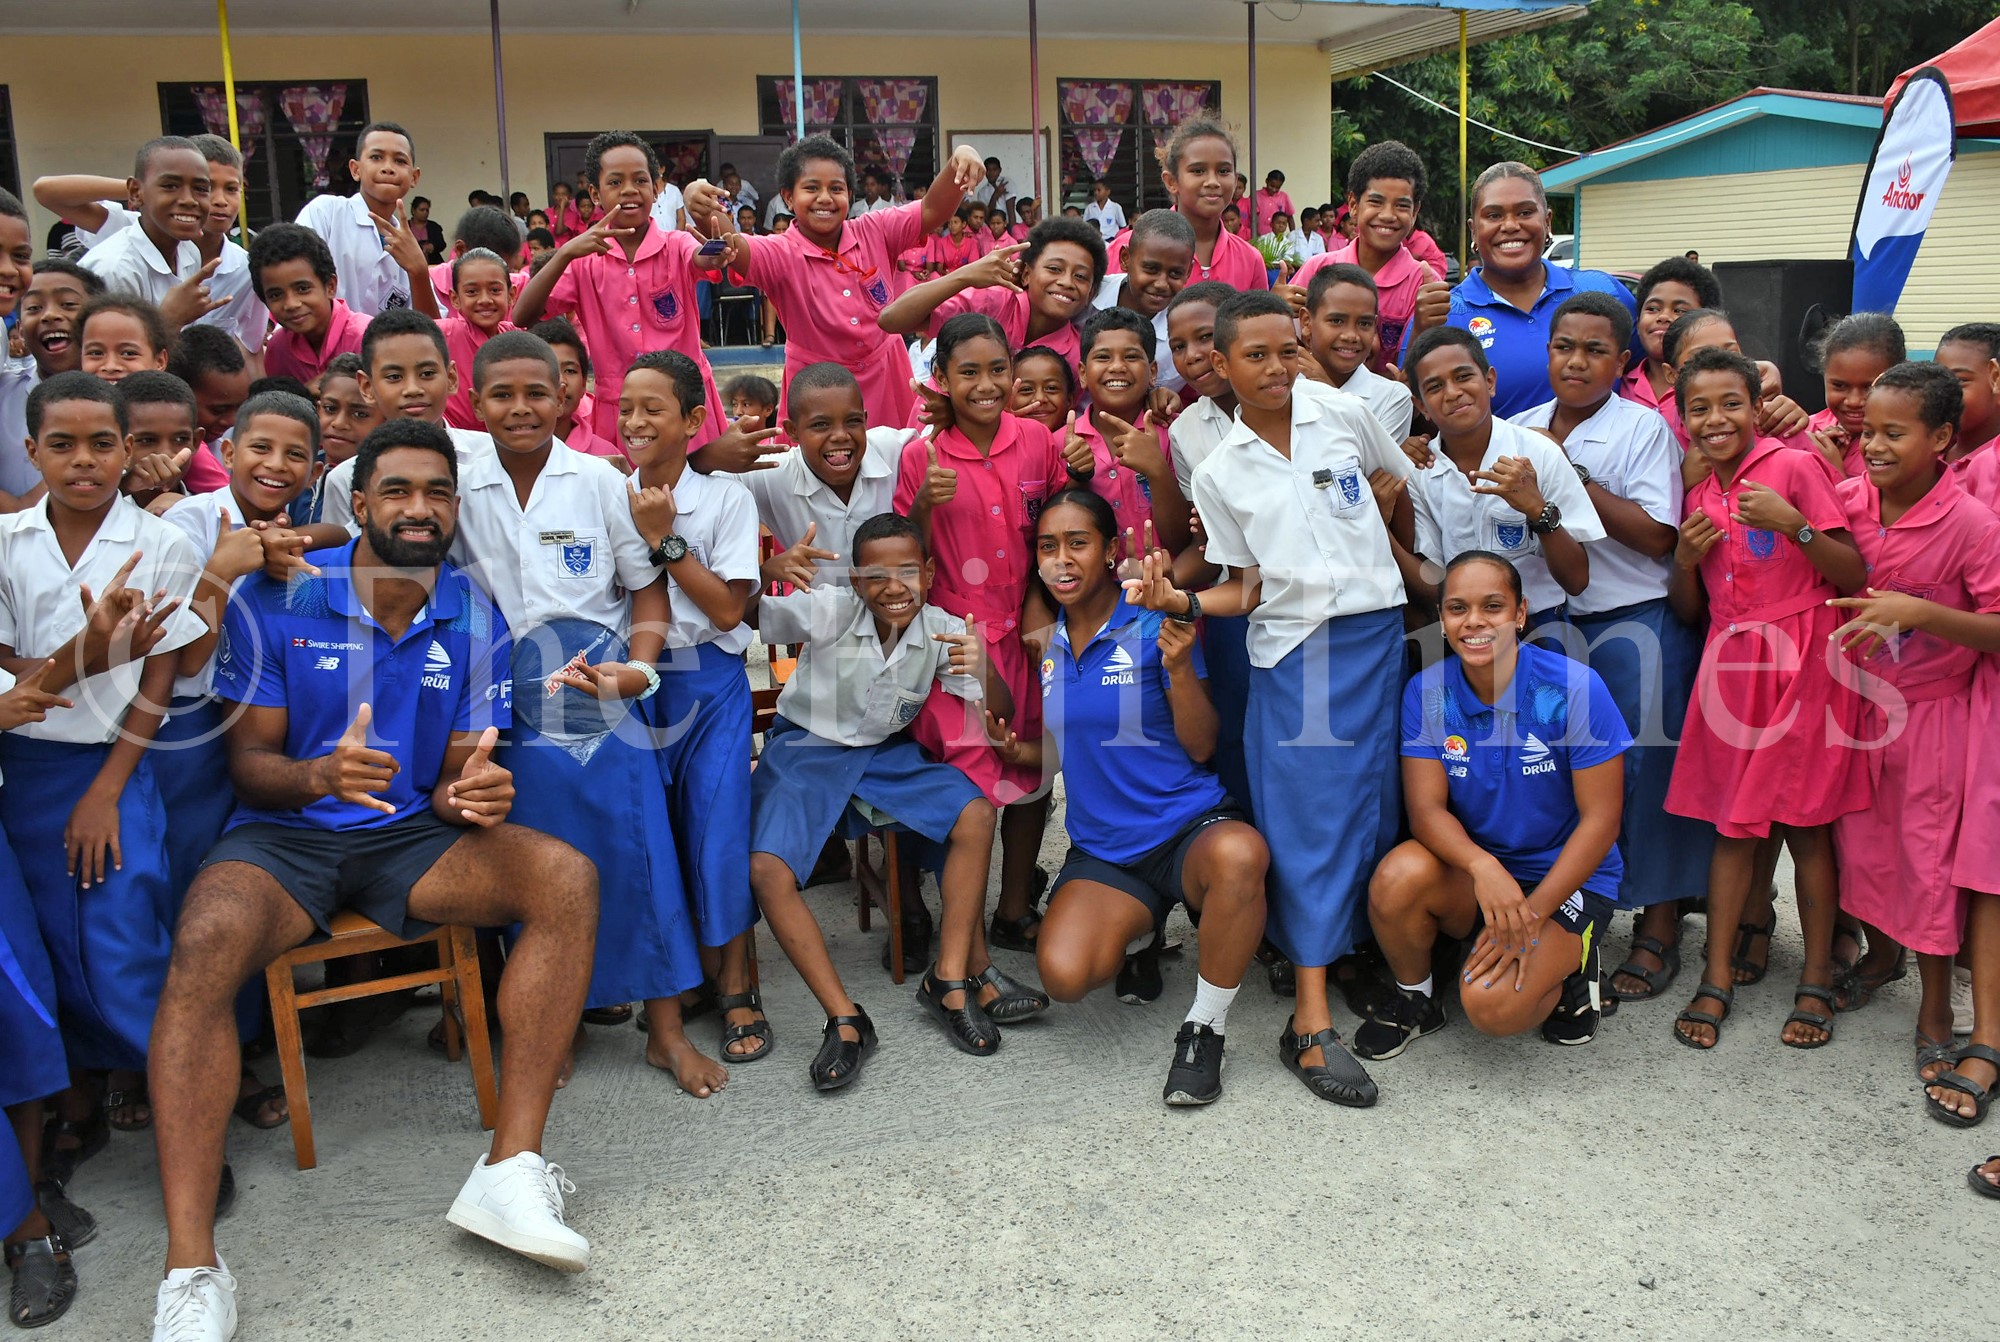 Drua's visit puts smiles on faces - The Fiji Times